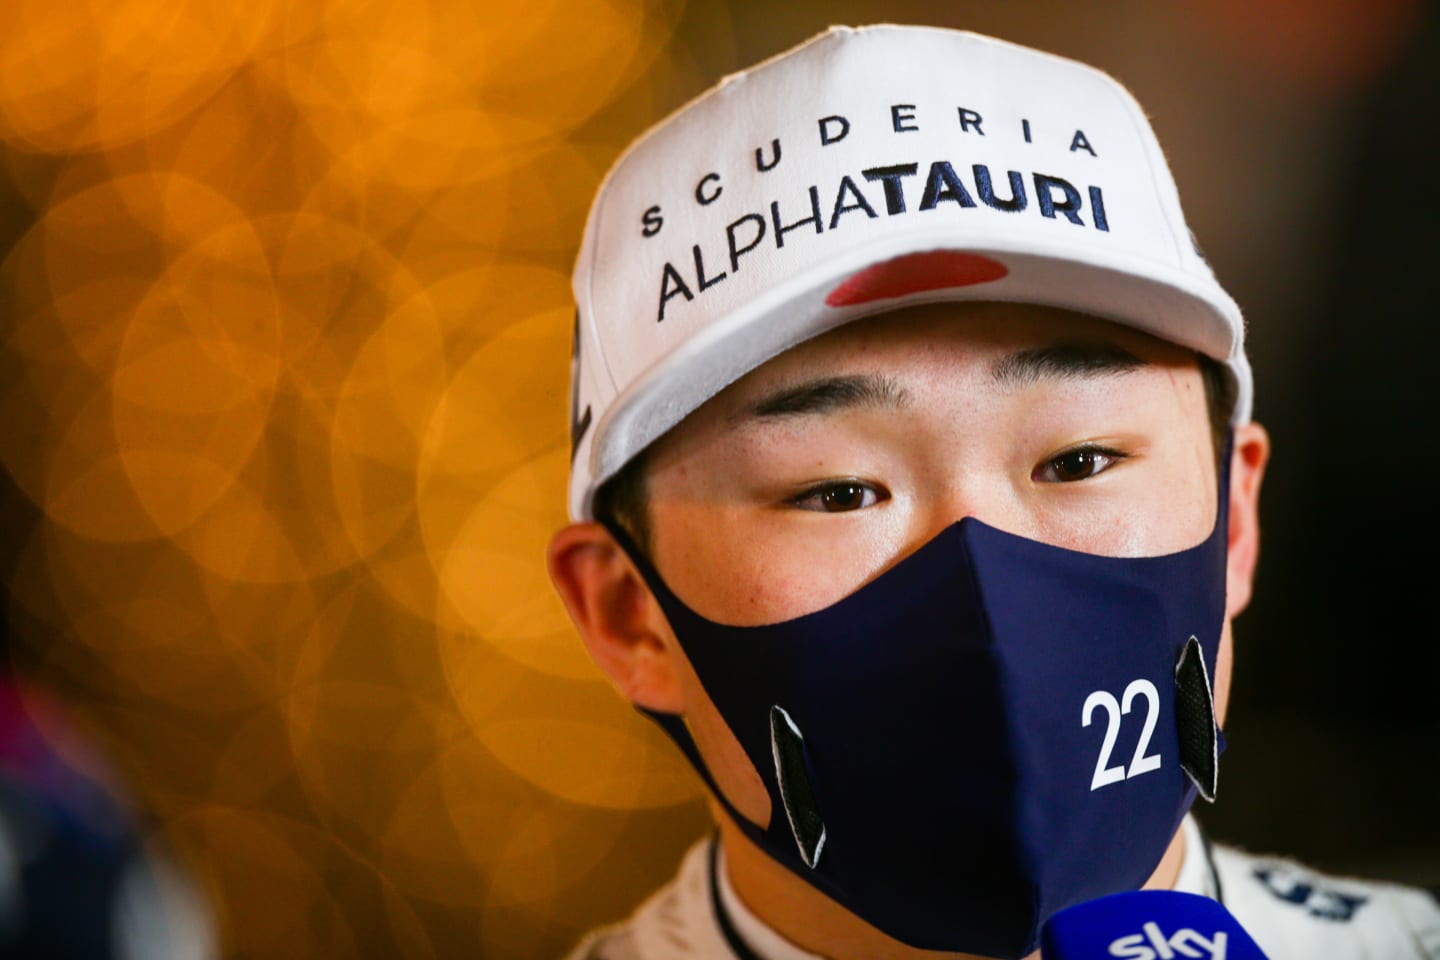 BAHRAIN, BAHRAIN - MARCH 28: Yuki Tsunoda of Scuderia AlphaTauri and Japan  during the F1 Grand